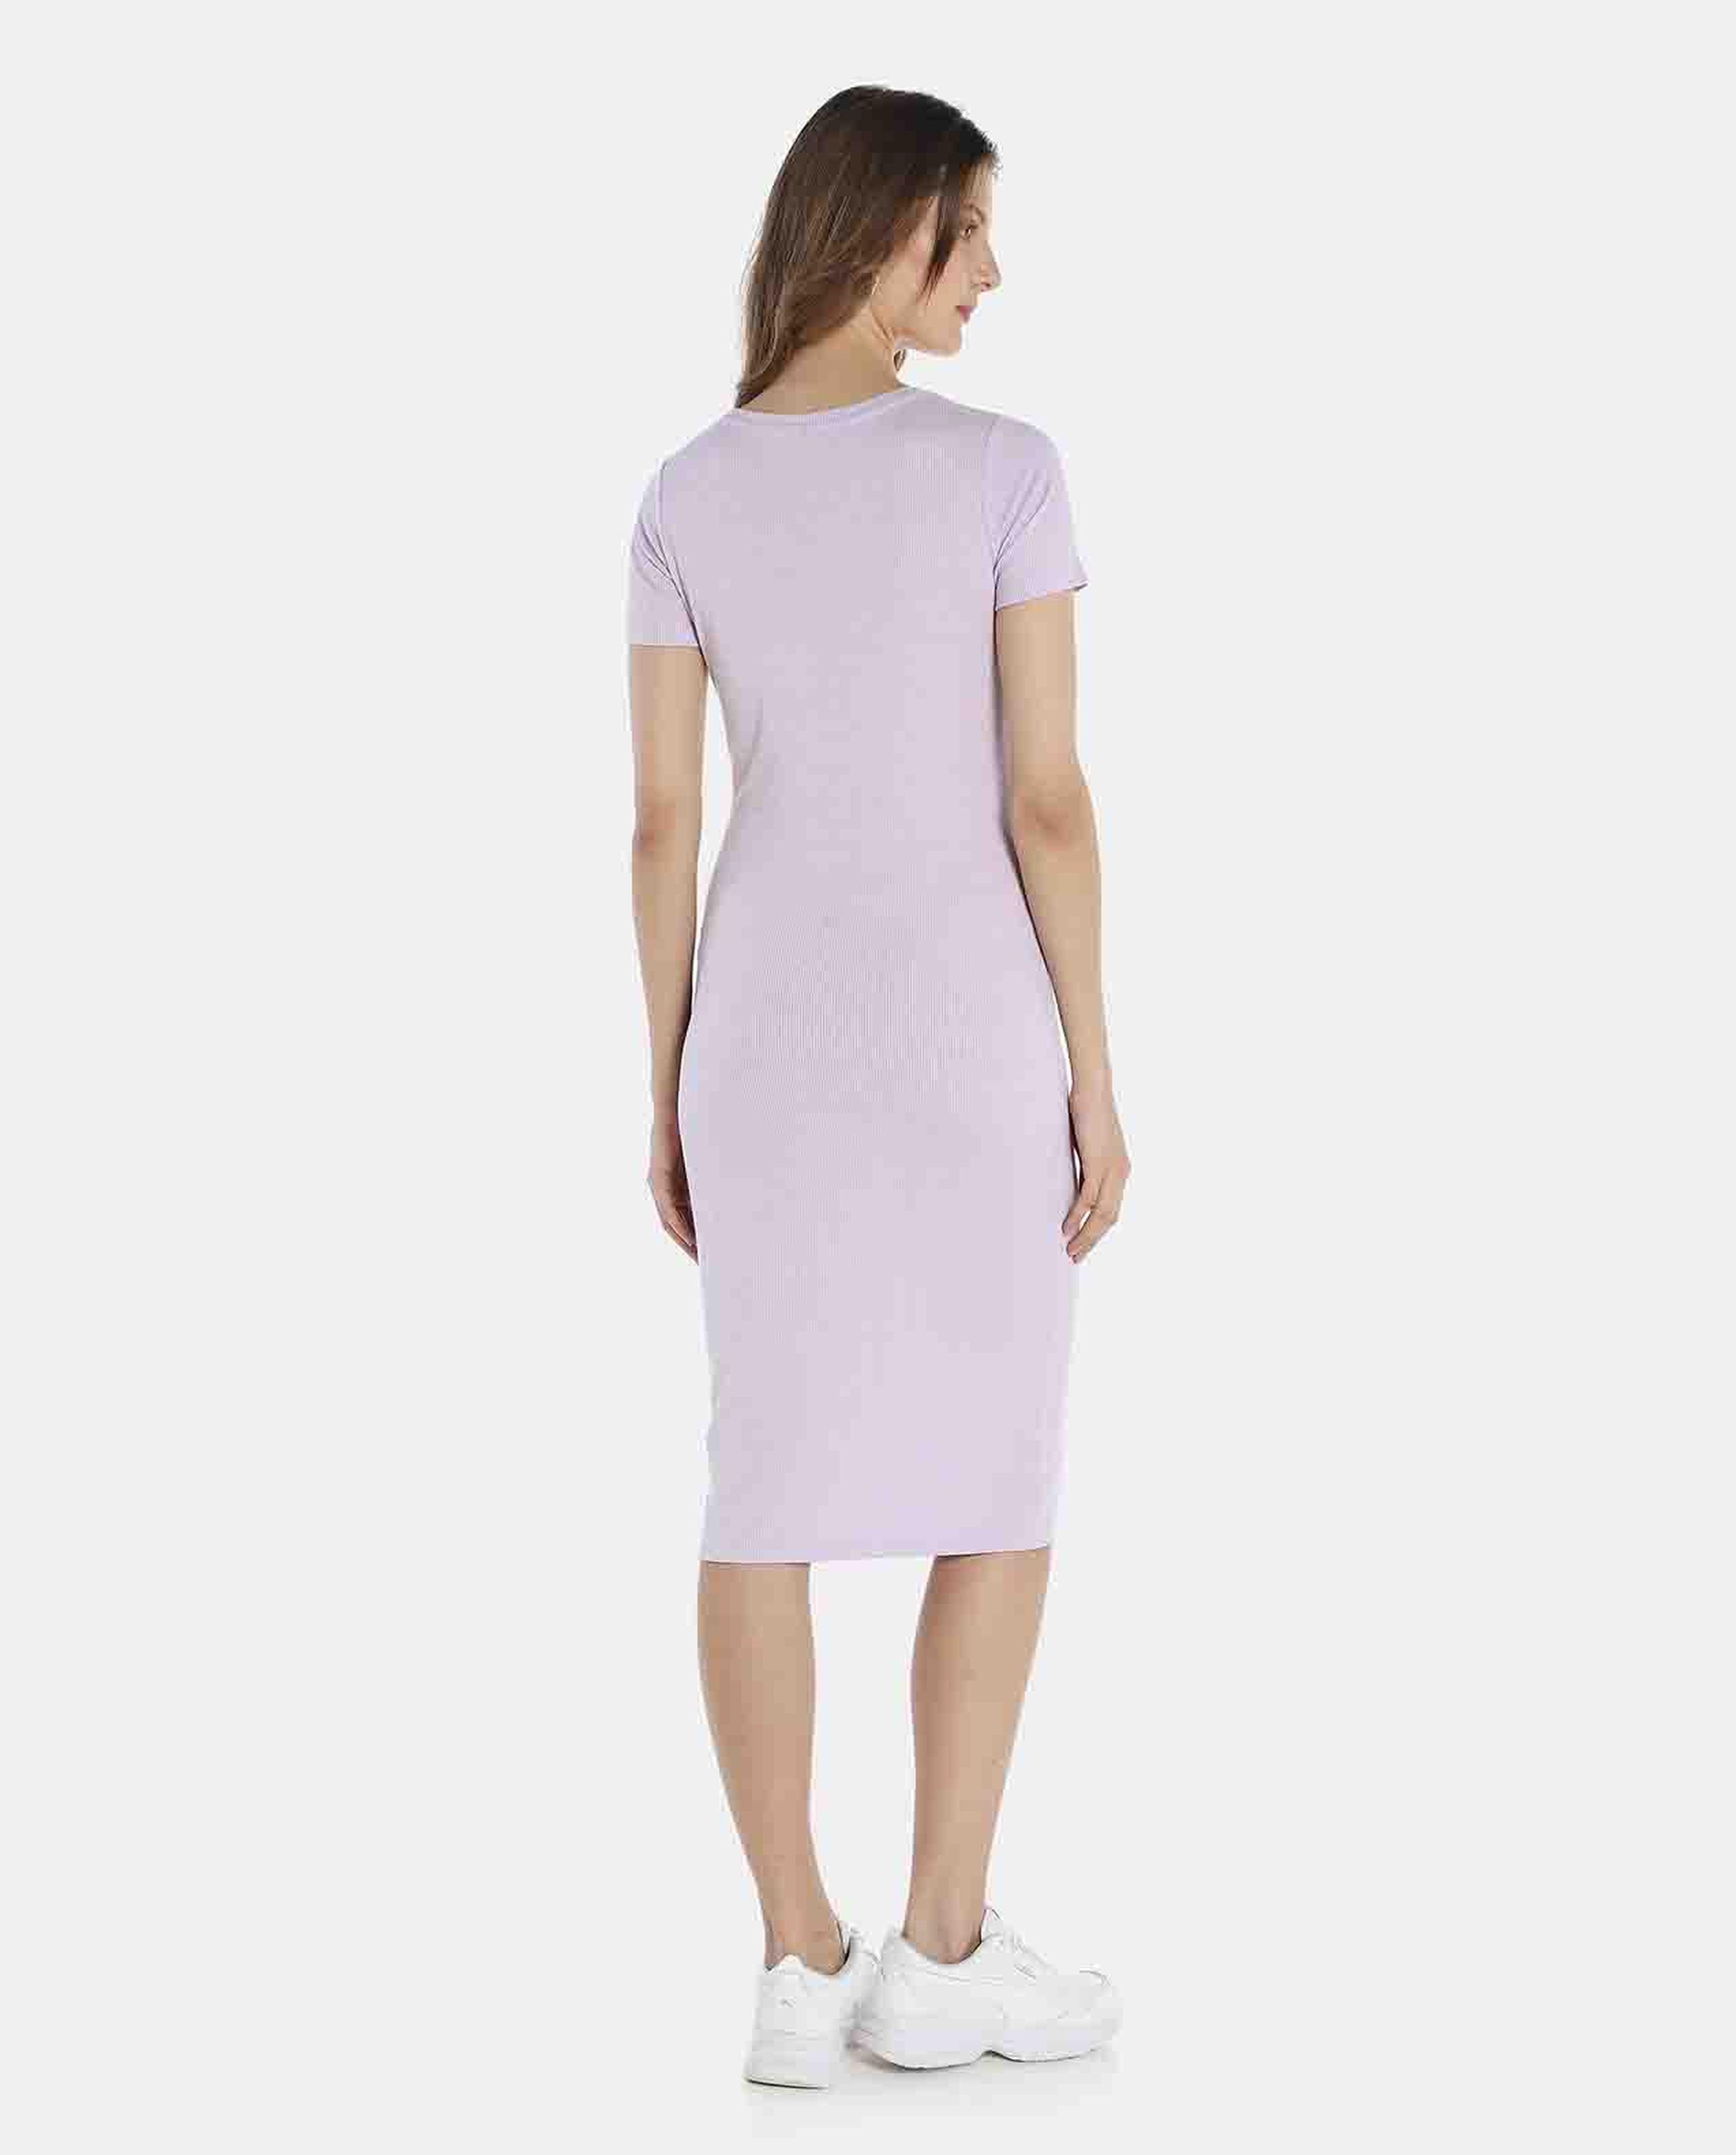 Lilac Bodycon Dress